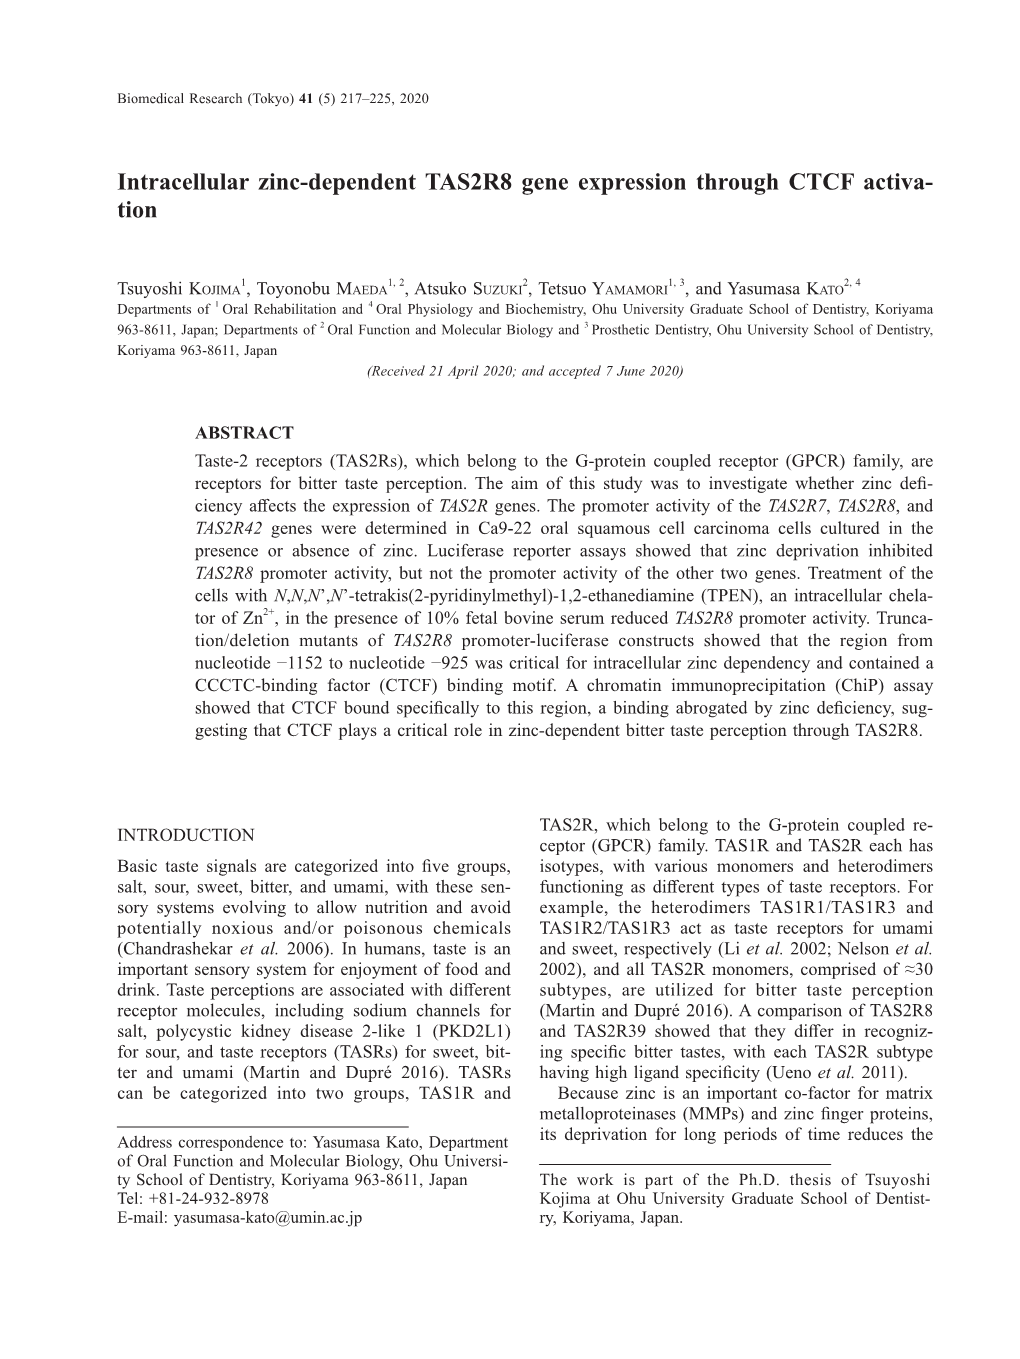 Intracellular Zinc-Dependent TAS2R8 Gene Expression Through CTCF Activa- Tion